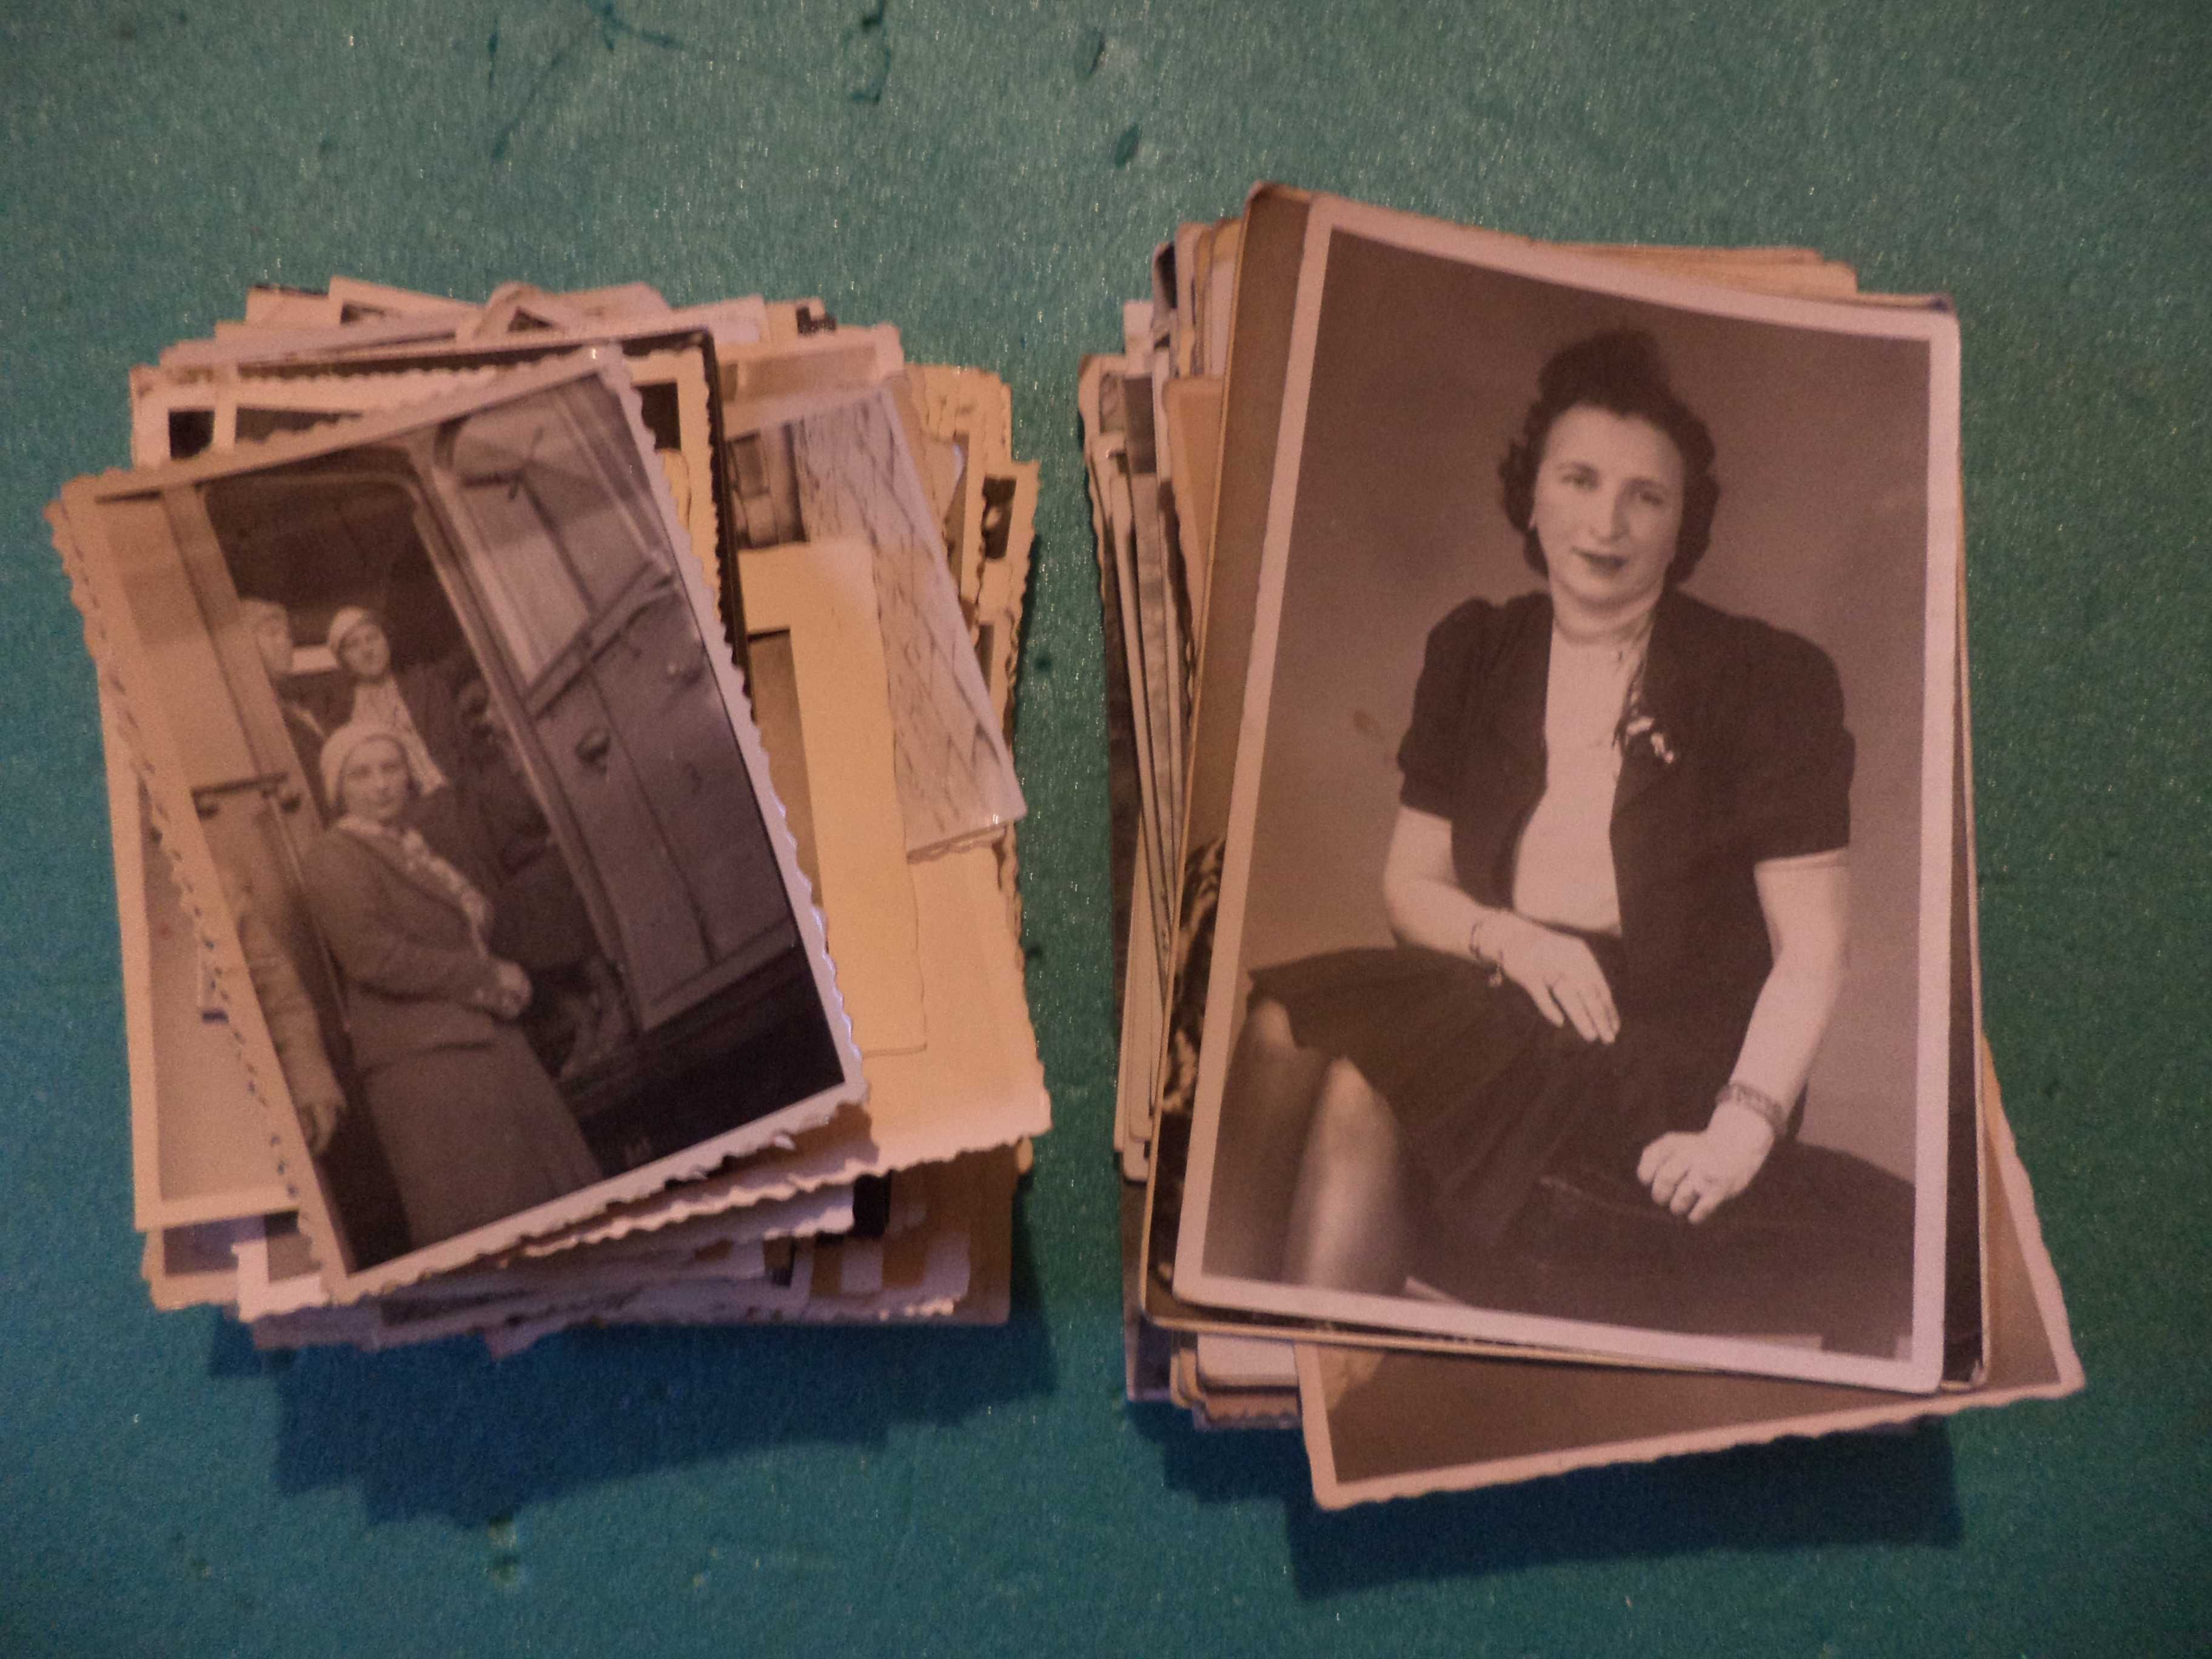 Lot poze fotografii vechi romanesti si straine 1937 - 1980 v - schimb